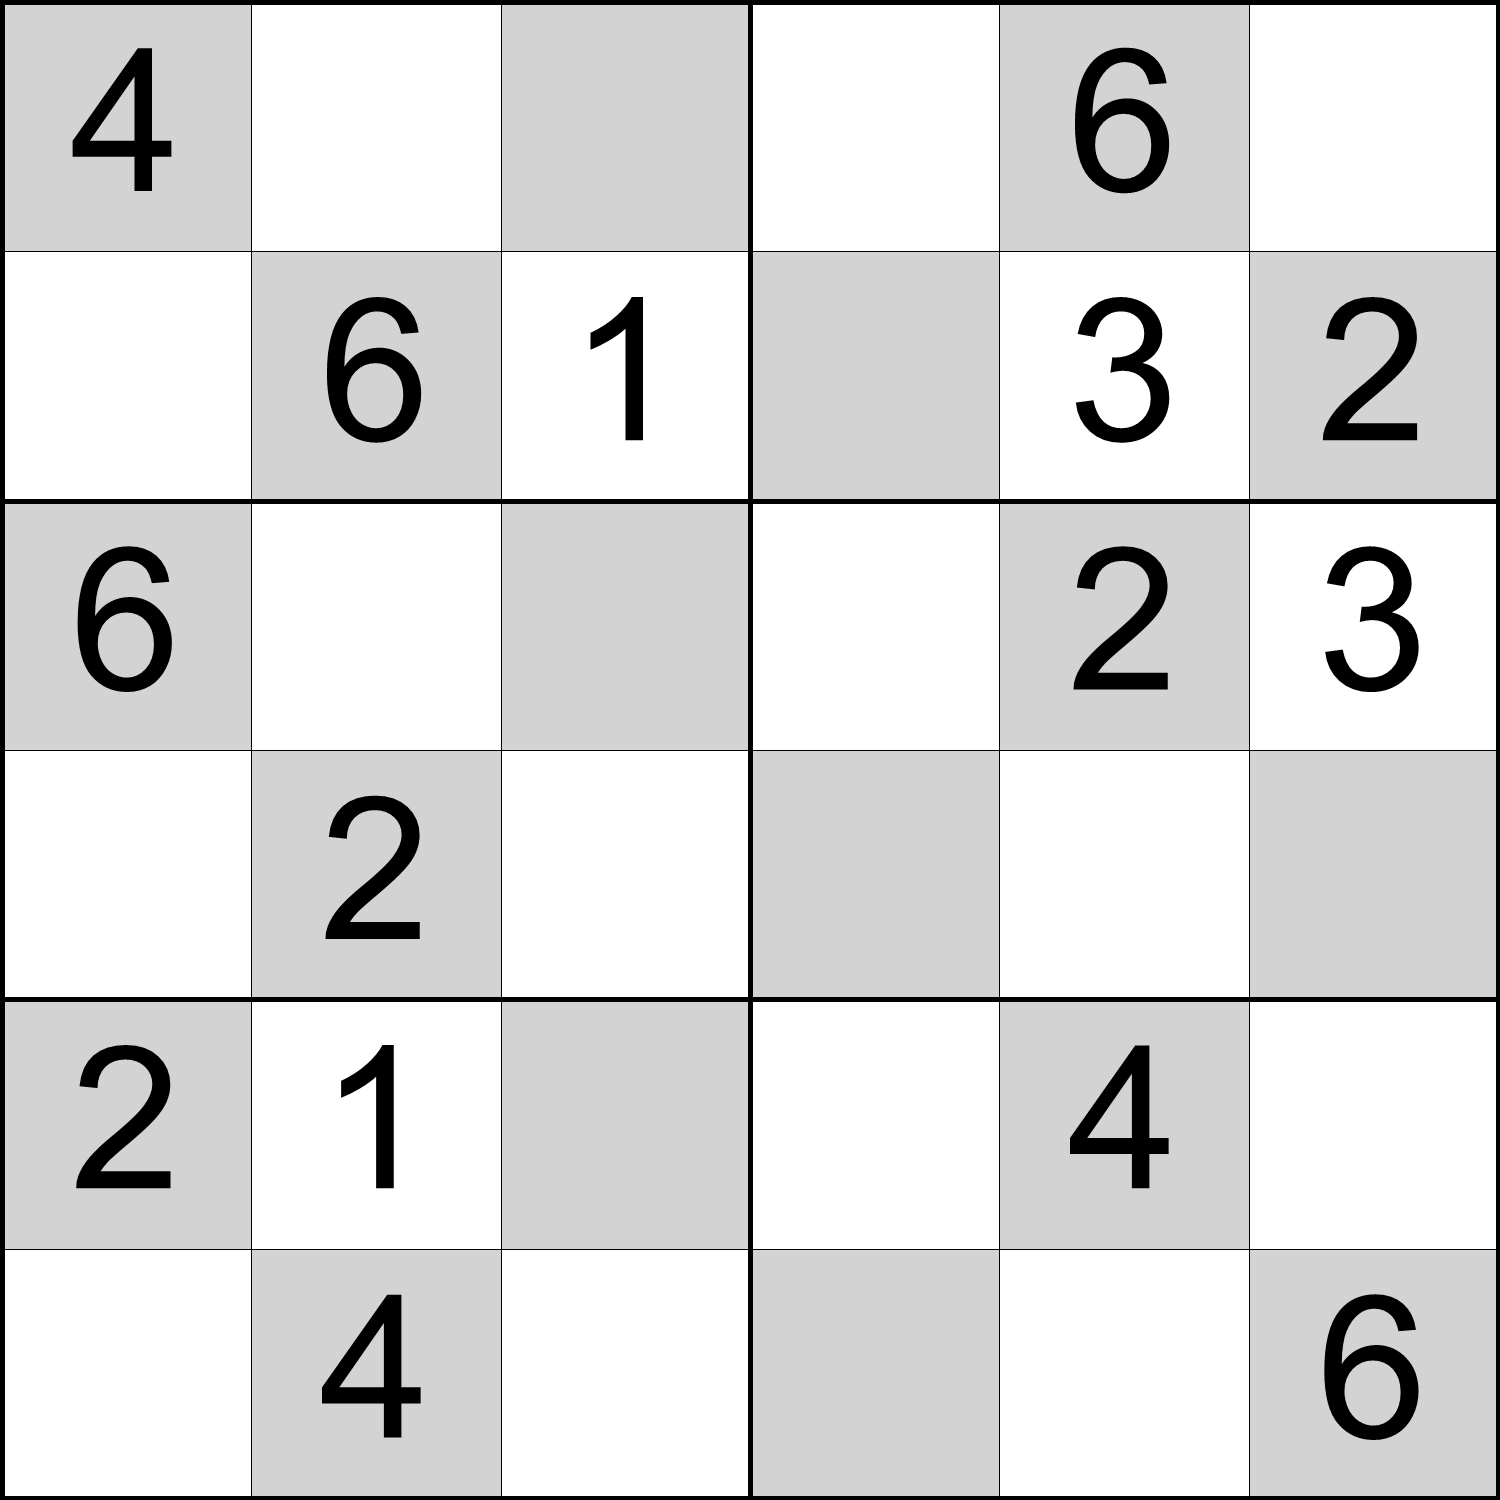 6x6 Easy Sudoku Puzzles Printable